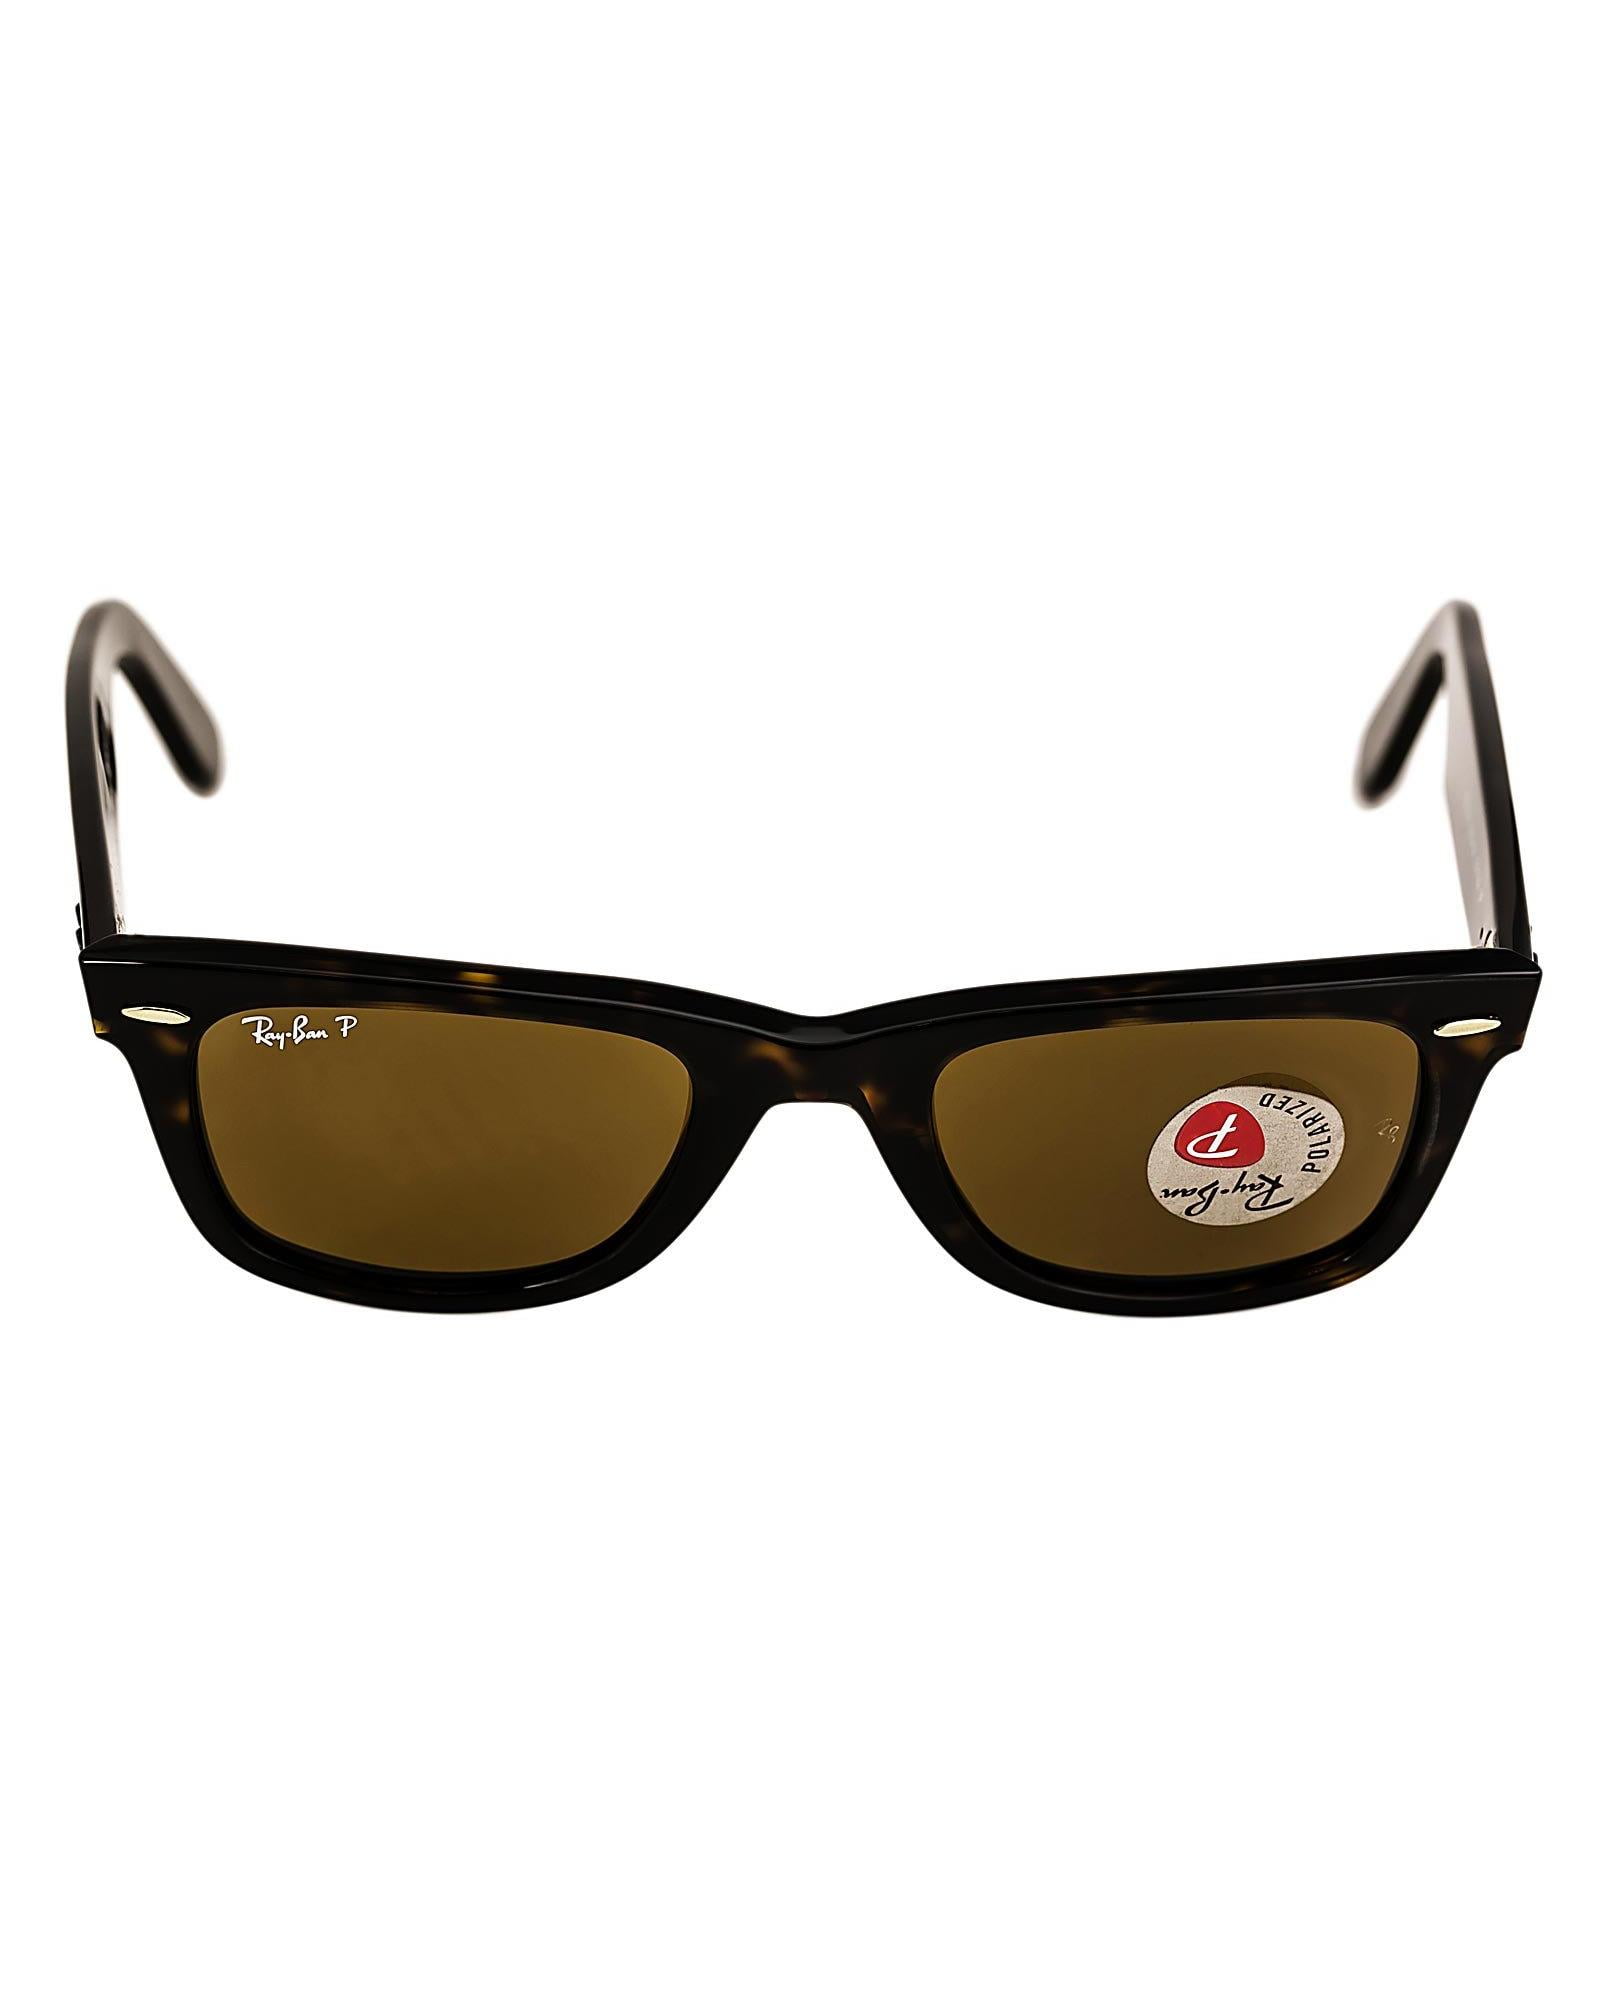 Buy Ray-Ban Original Wayfarer Optics Eyeglasses Online.